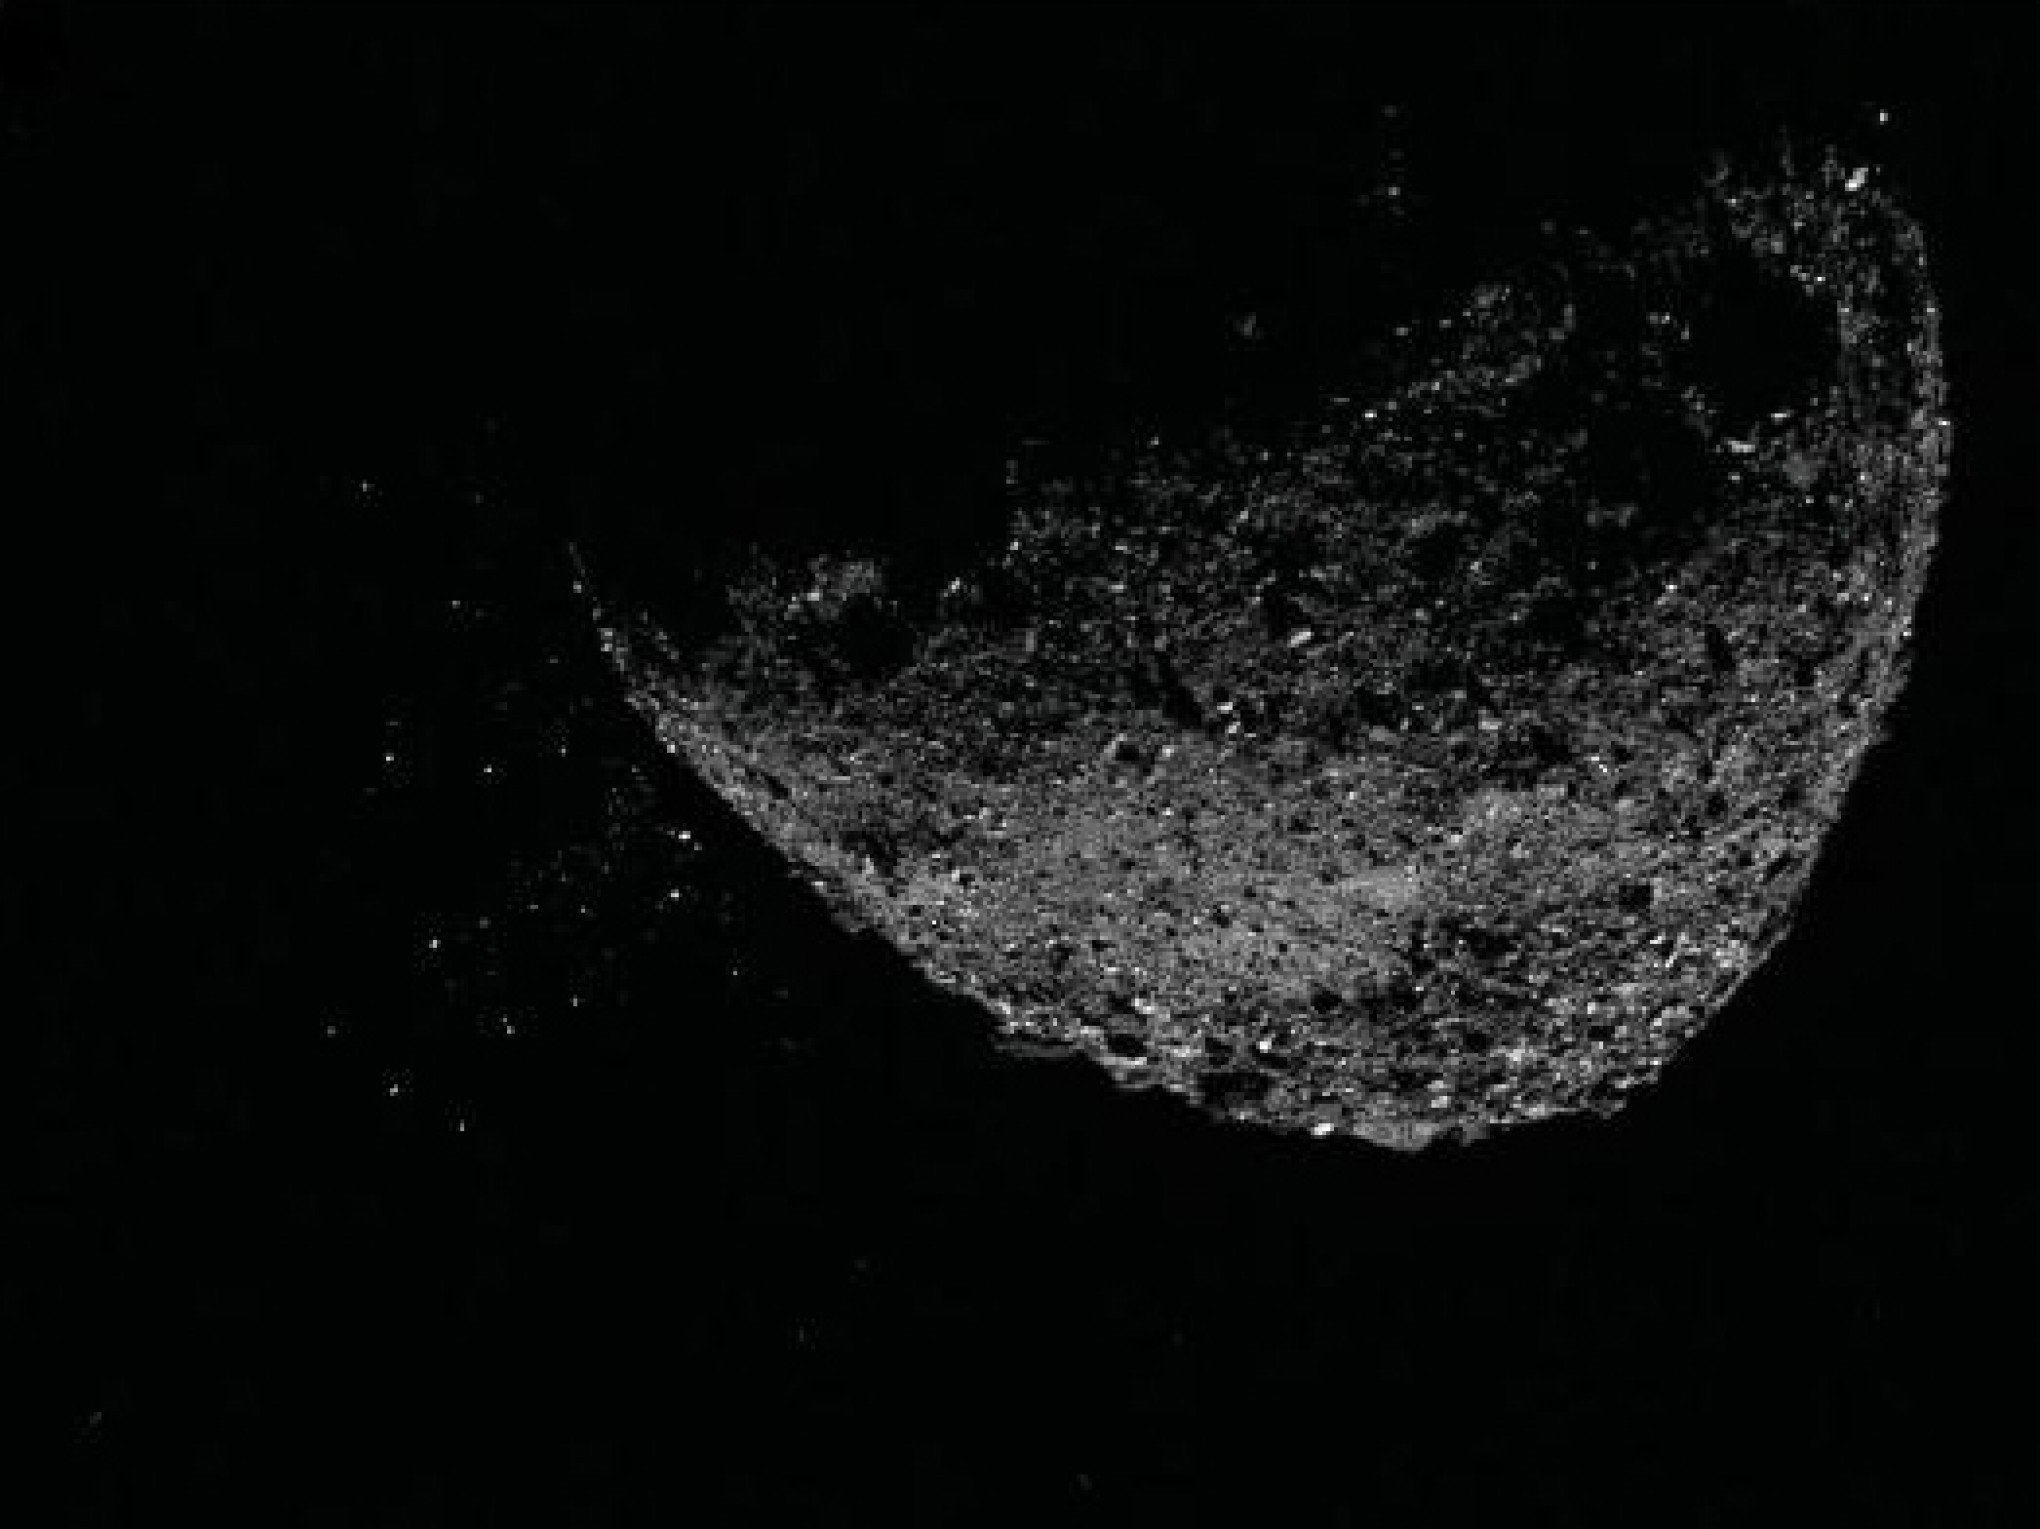 Asteroide que passa perigosamente perto da Terra a cada seis anos pode vir de planeta com oceano